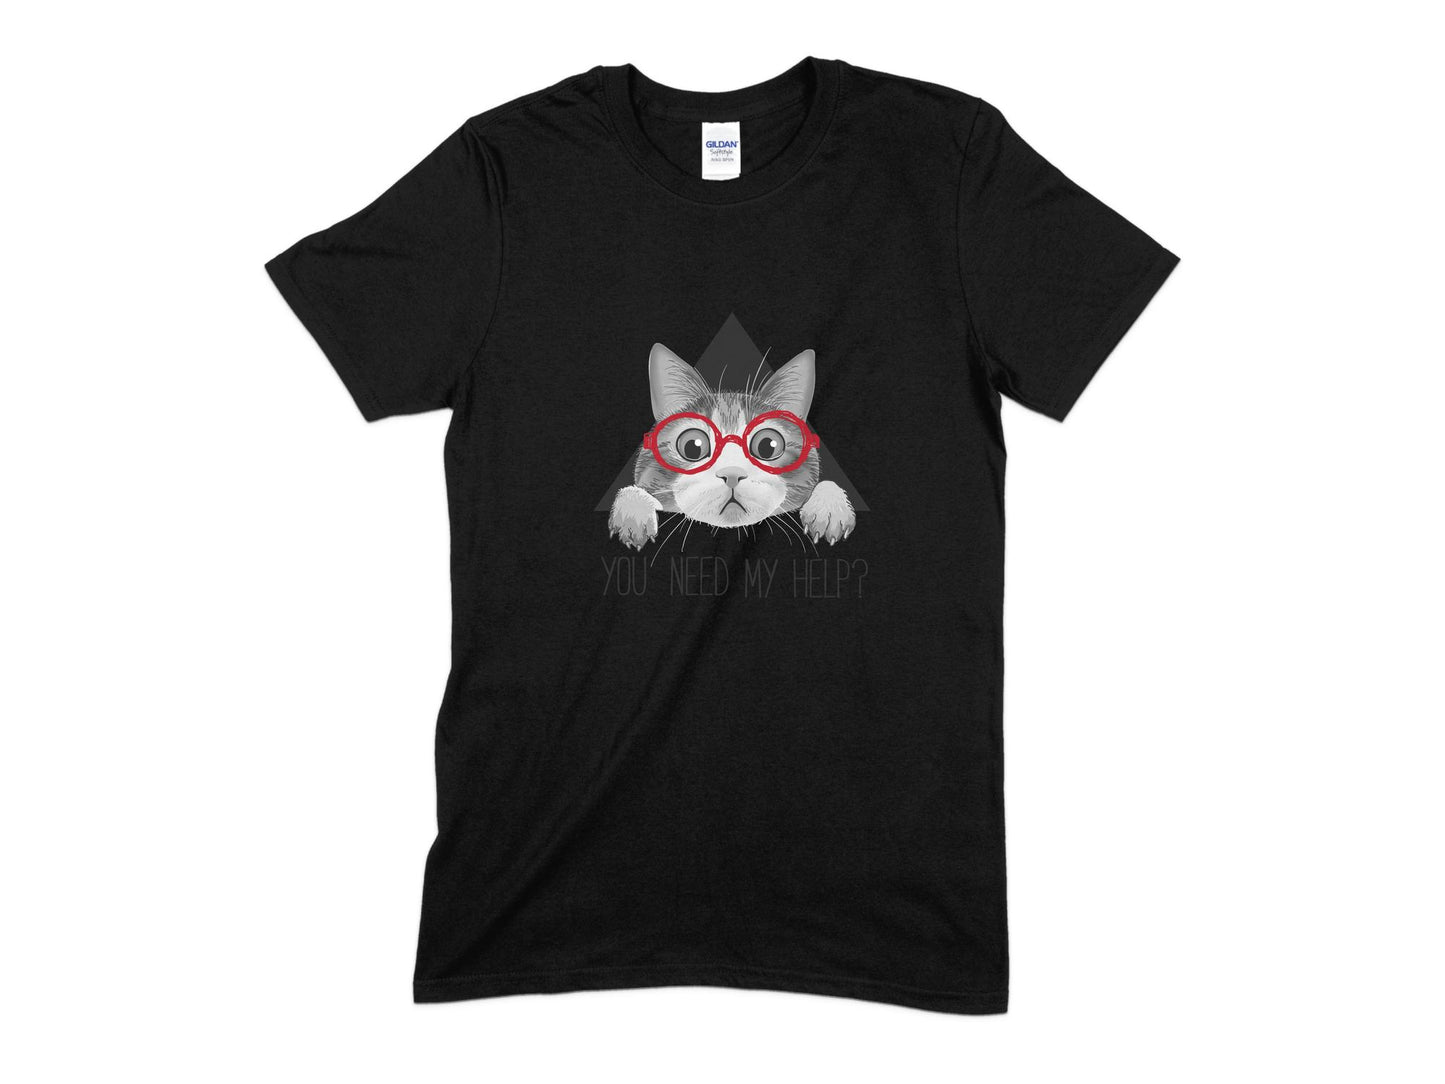 You Need My Help Cat T-Shirt, Cute Cat T-Shirt